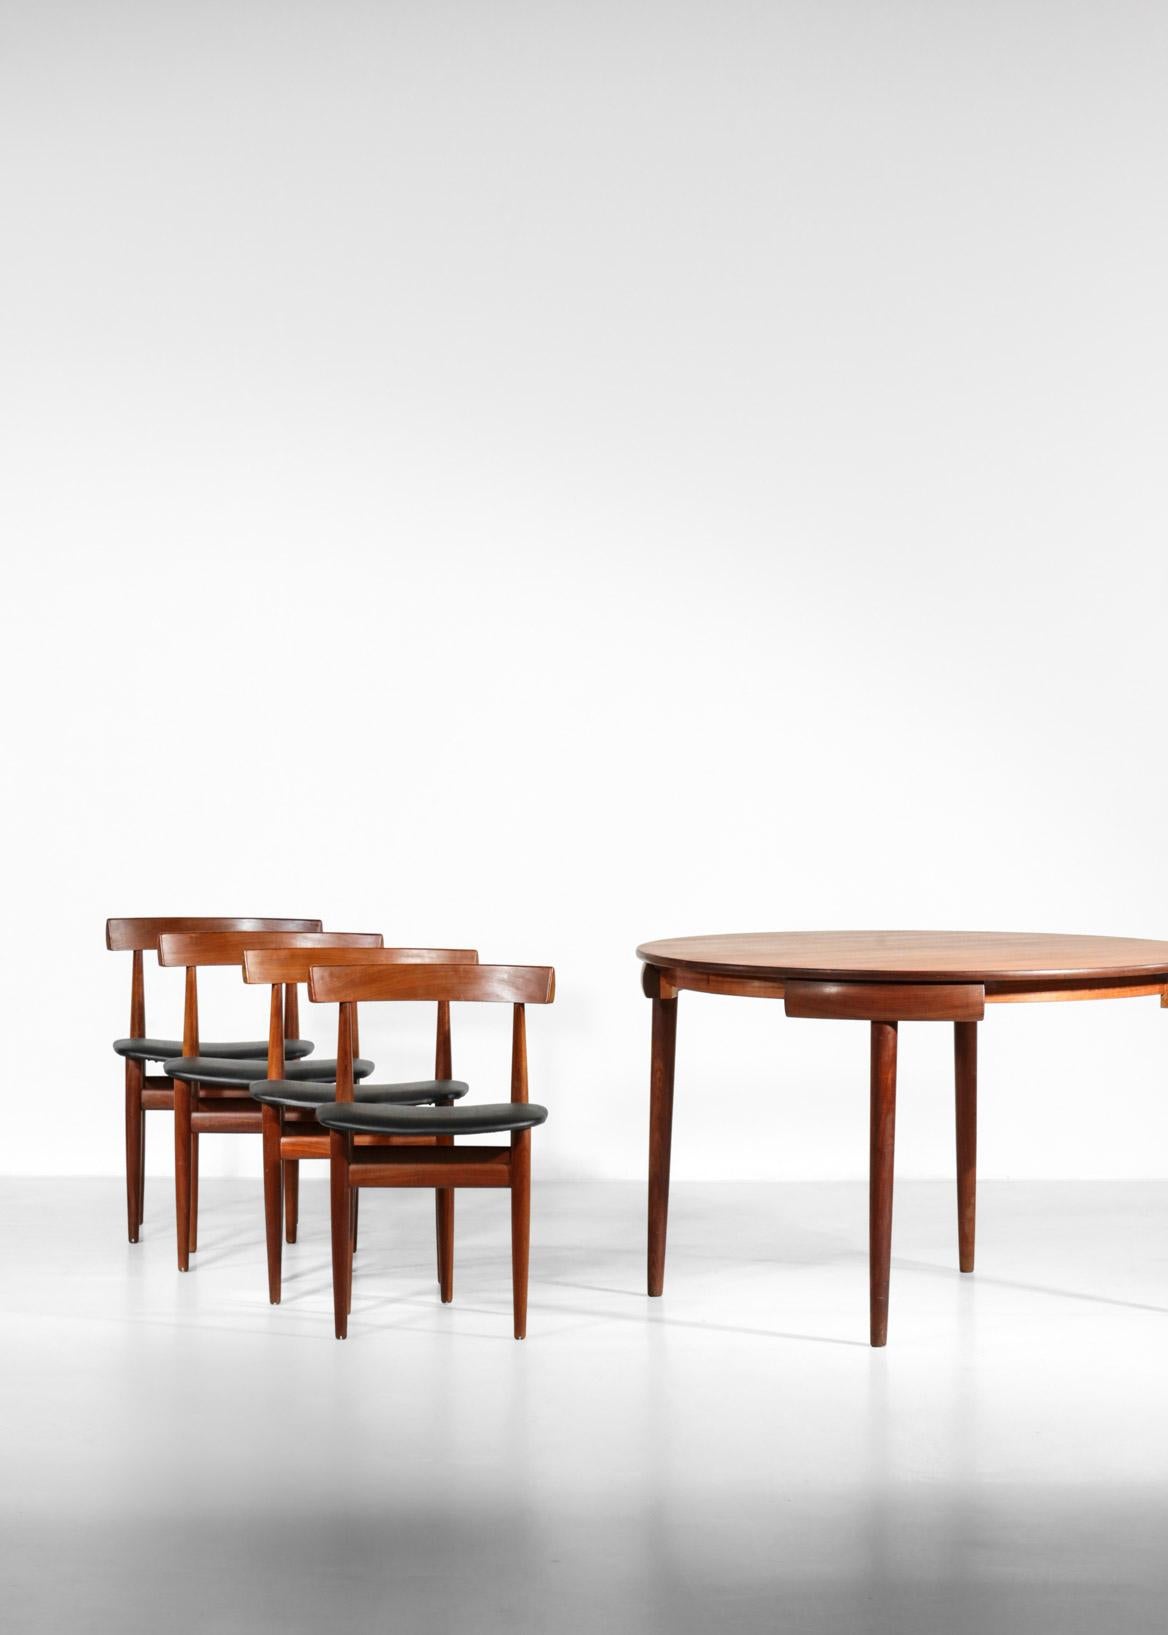 20th Century Hans Olsen Dining Table Set in Teak, Danish Design